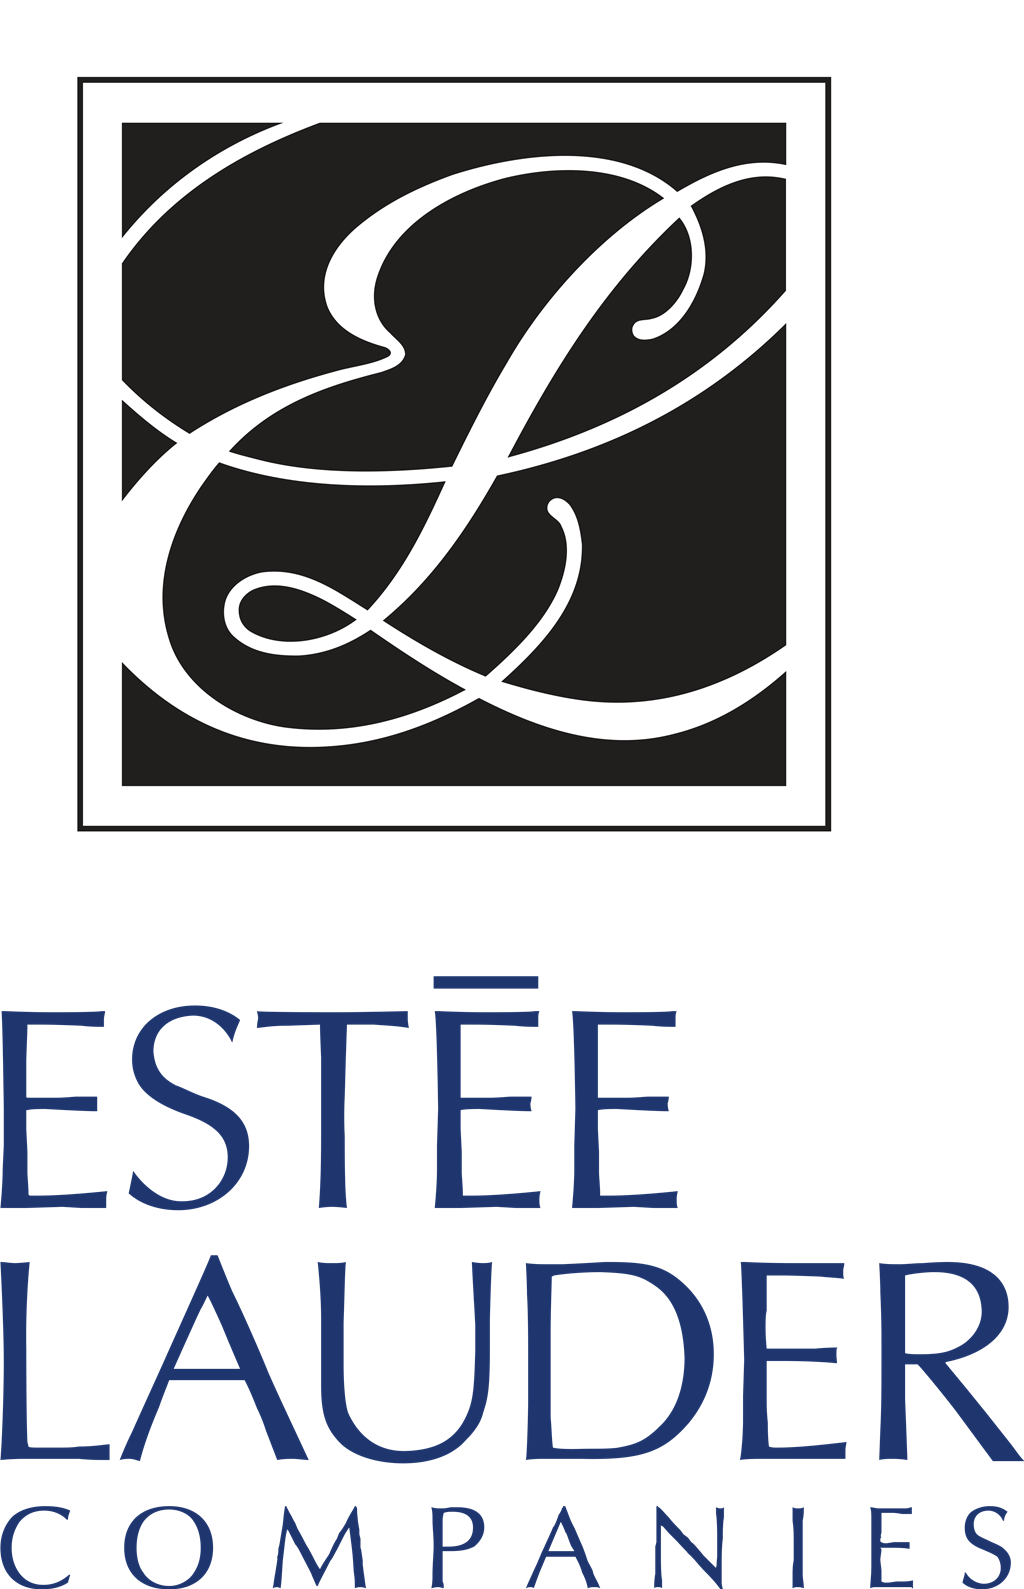 Estee Lauder logotype, transparent .png, medium, large